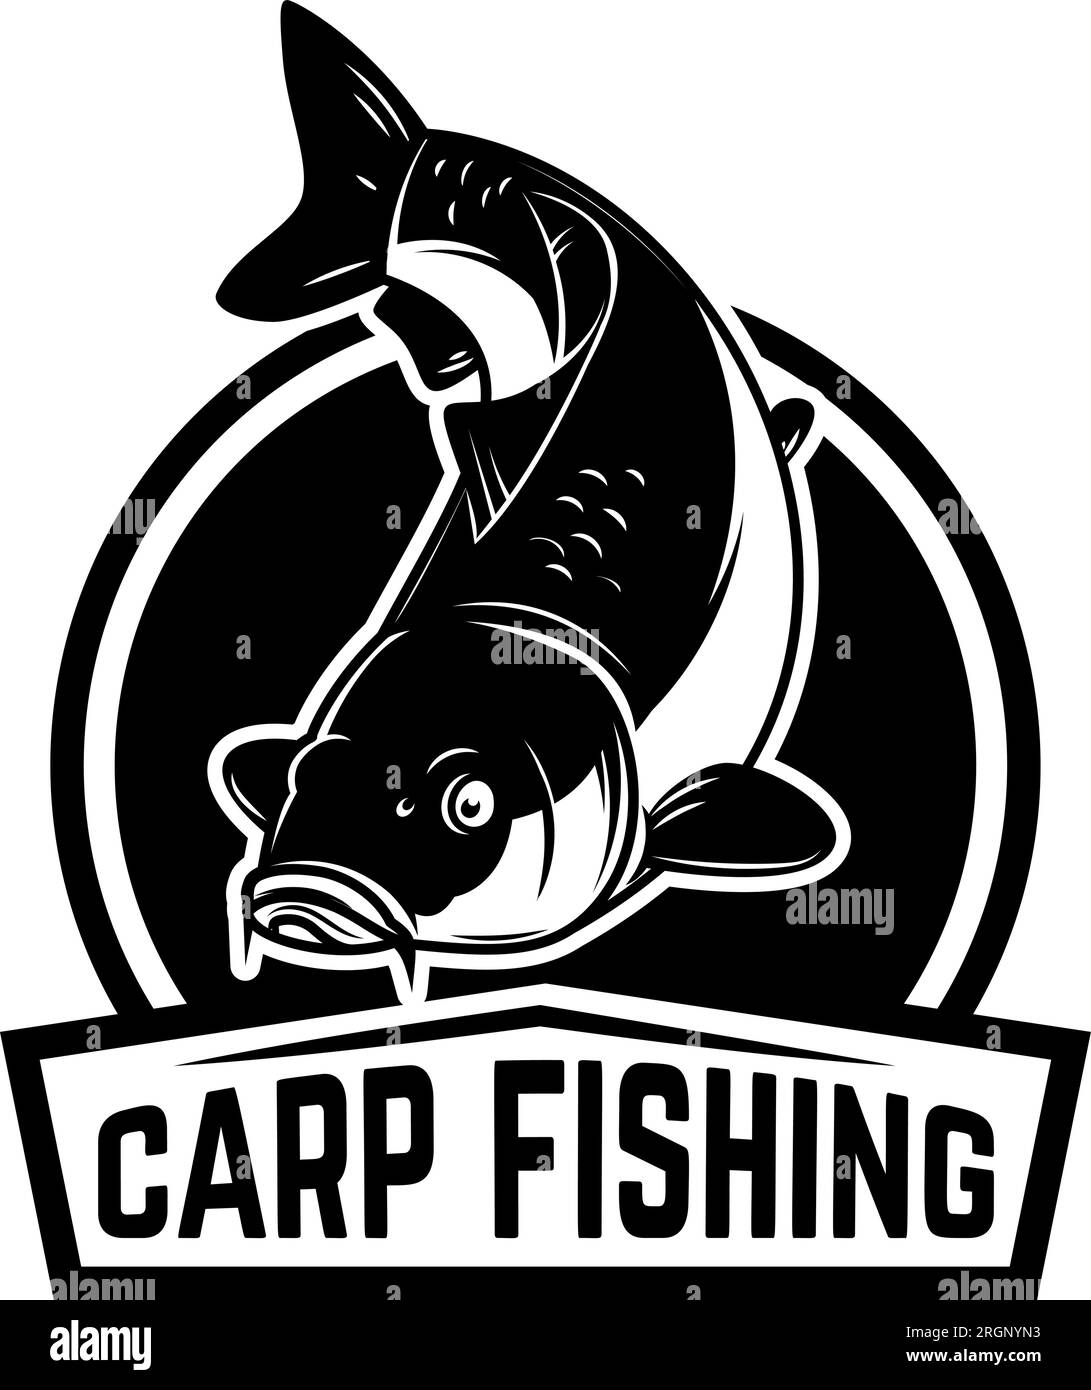 Set of carp fishing emblems in monochrome style. Carp fish logo